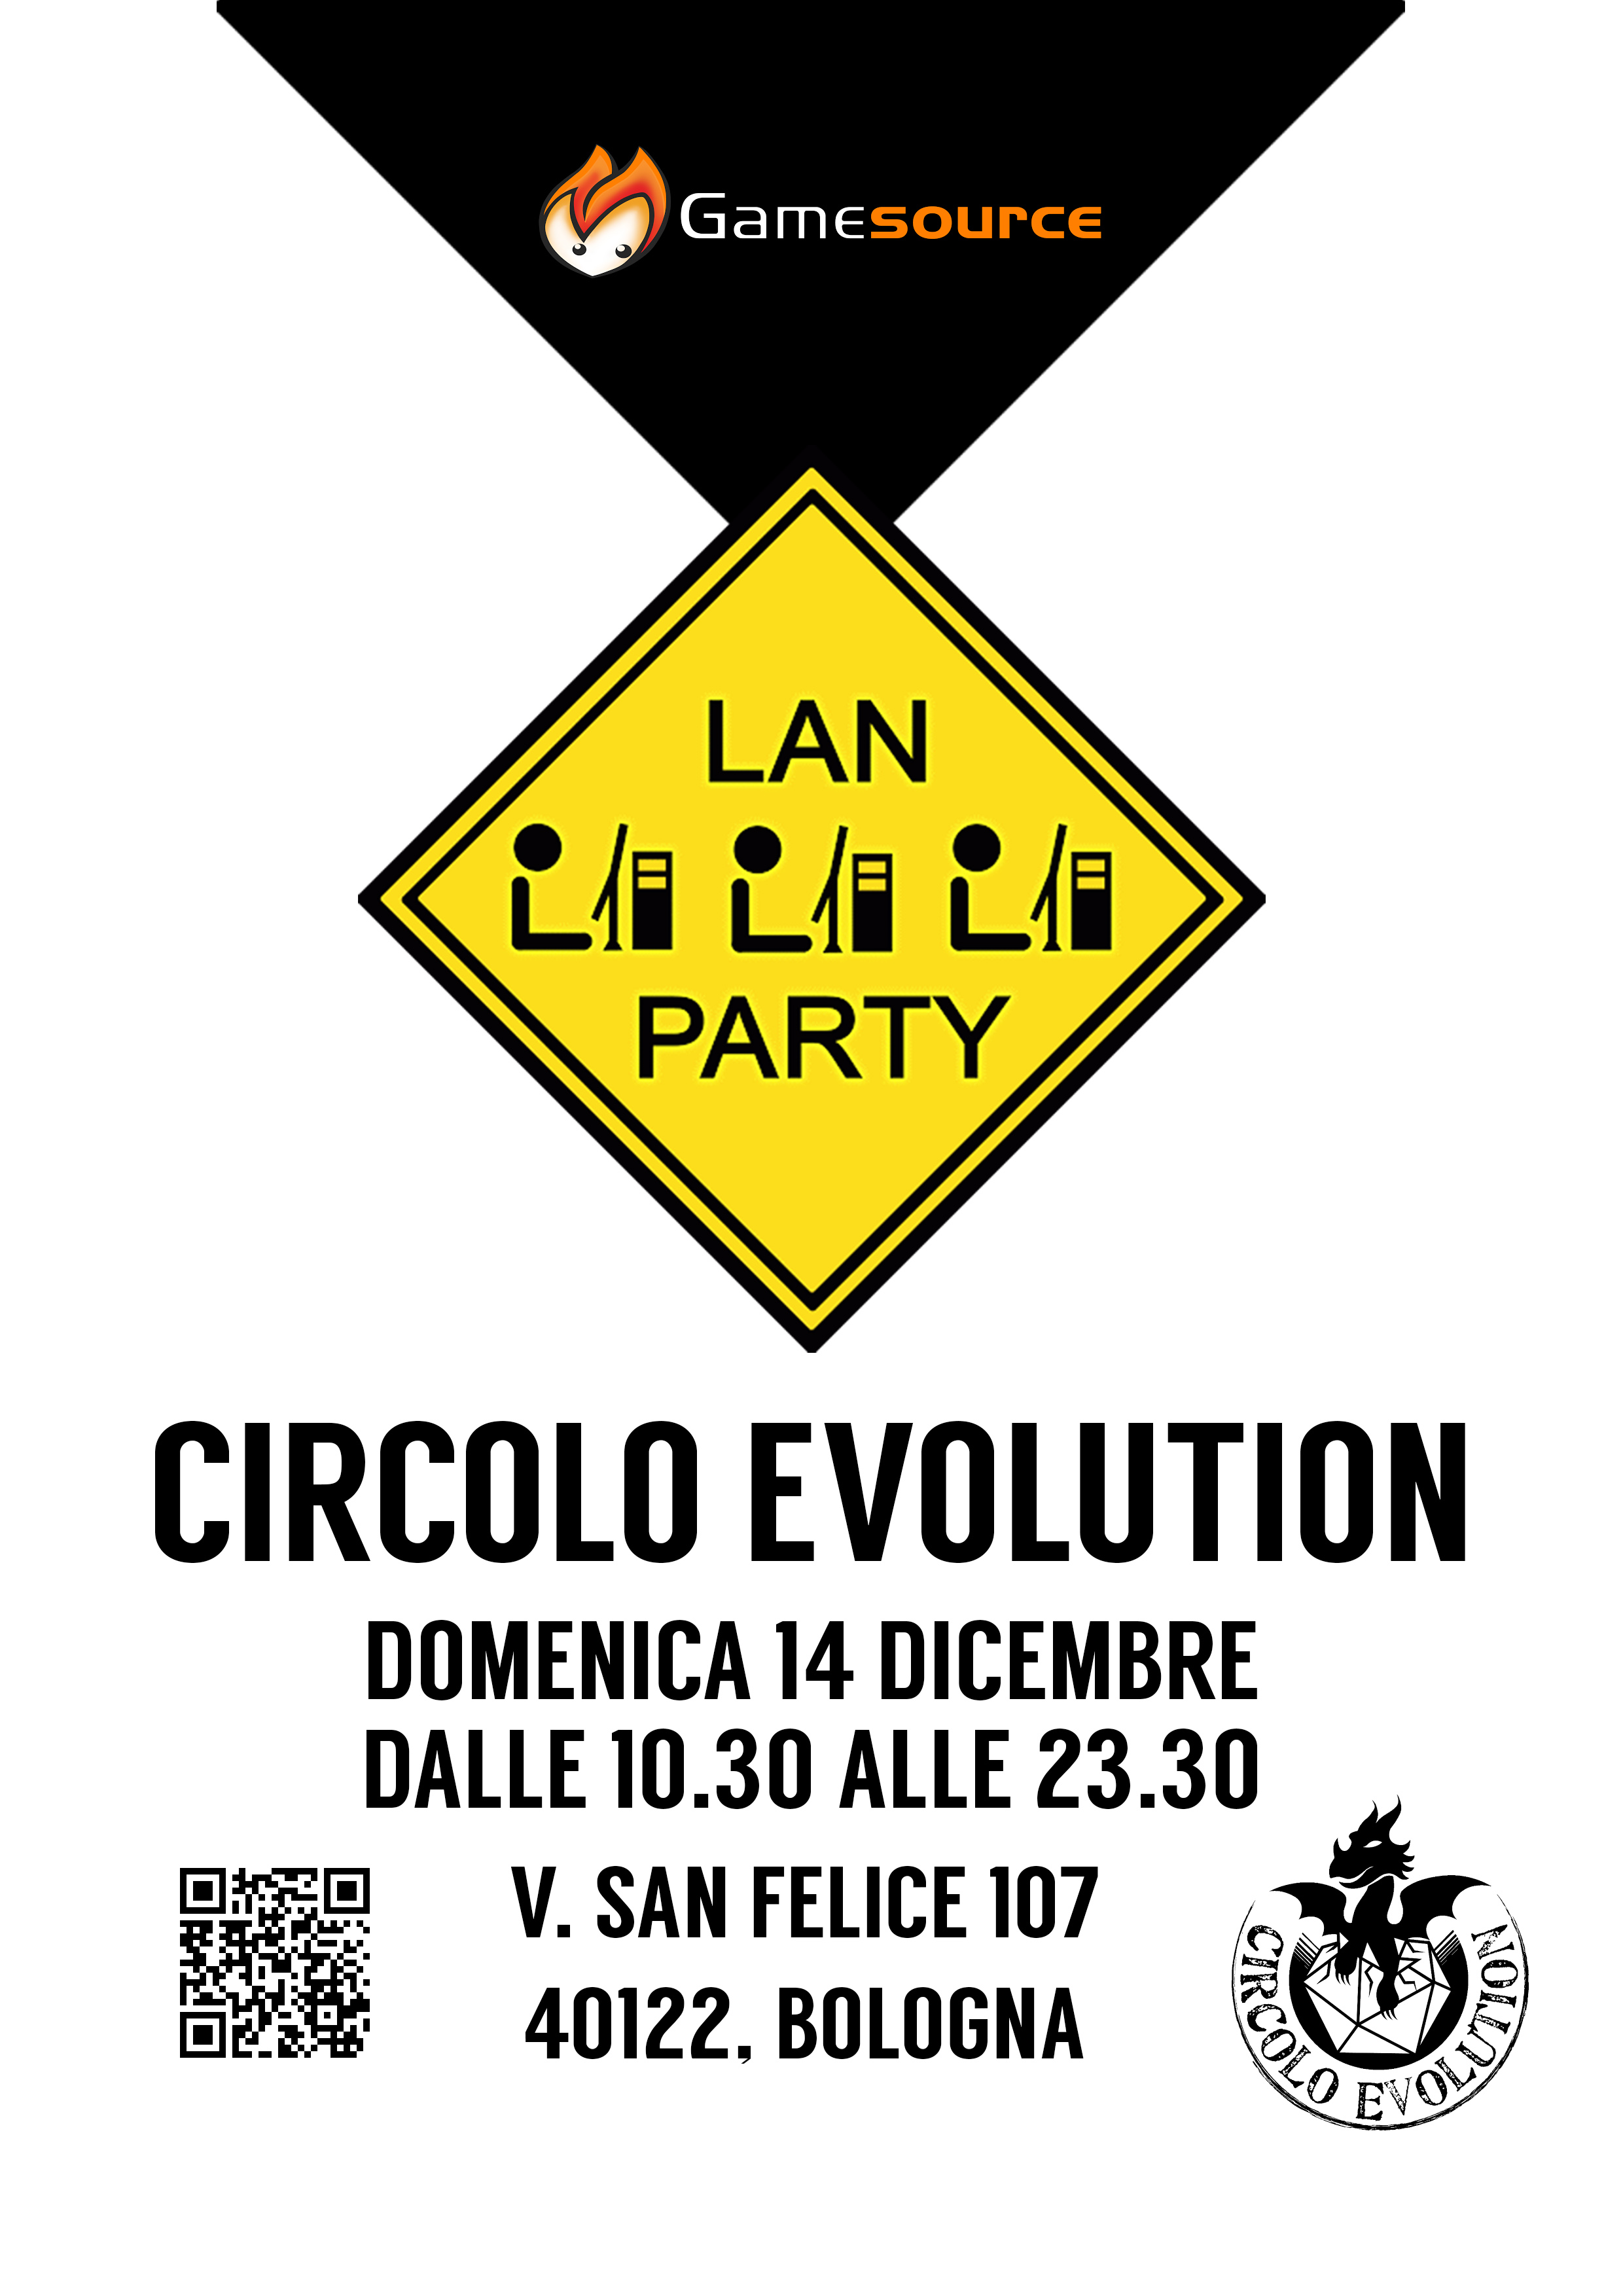 Lan party GameSource.it a Bologna!